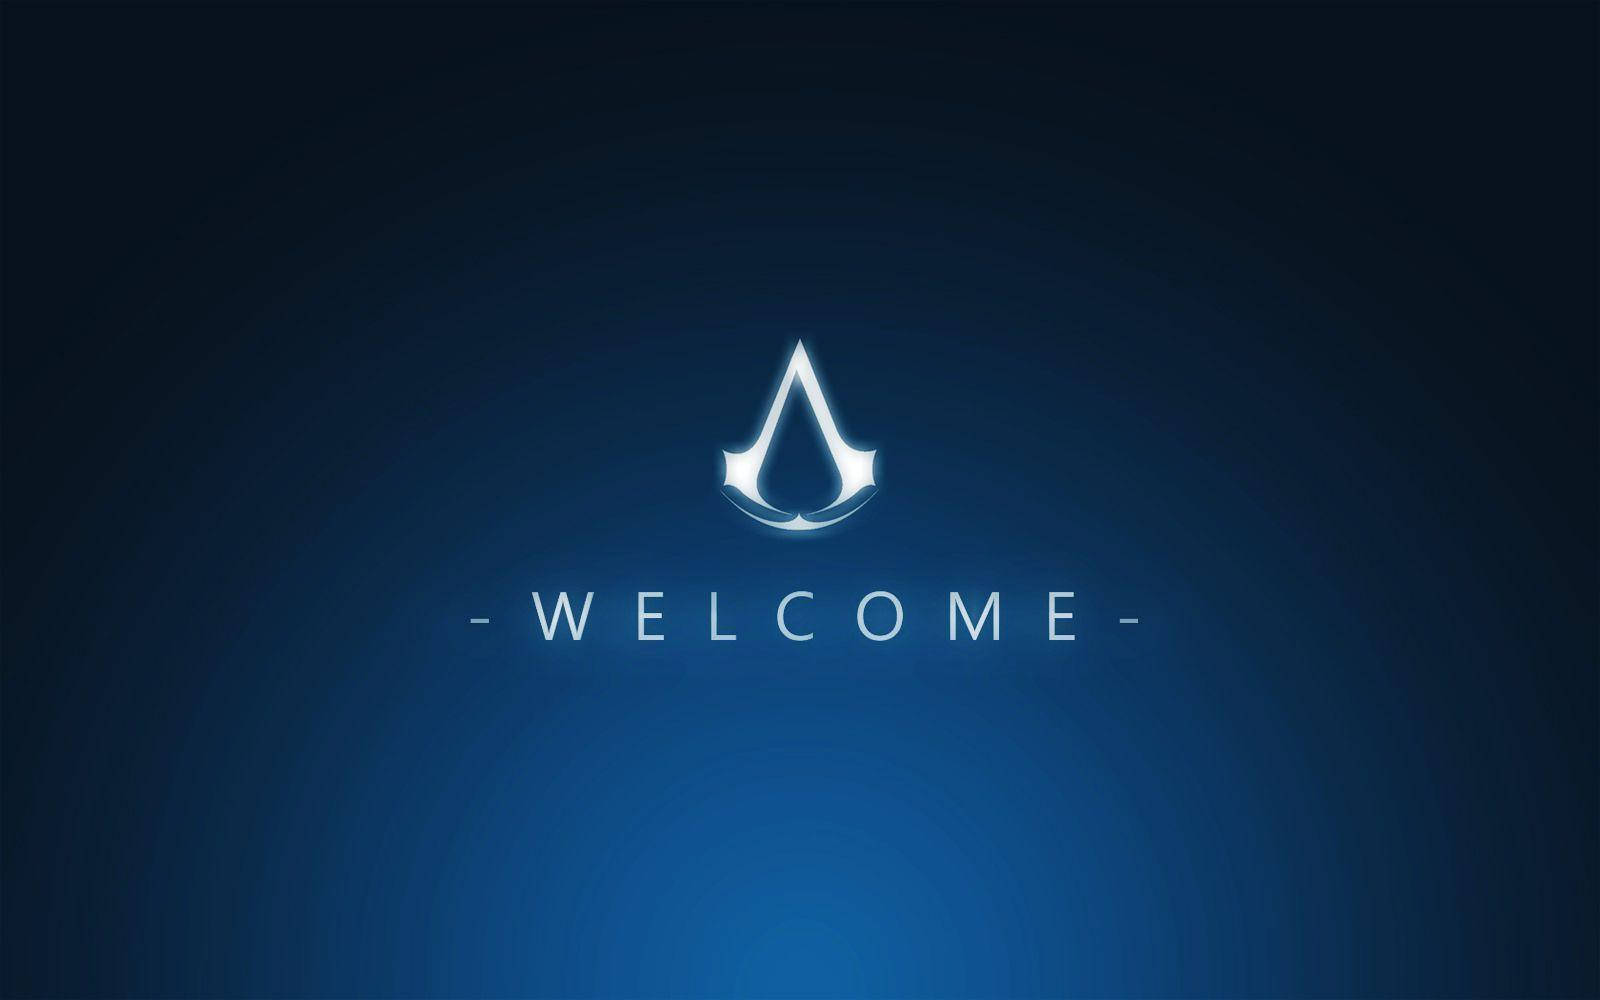 Welcome Assassins Creed Logo Wallpaper